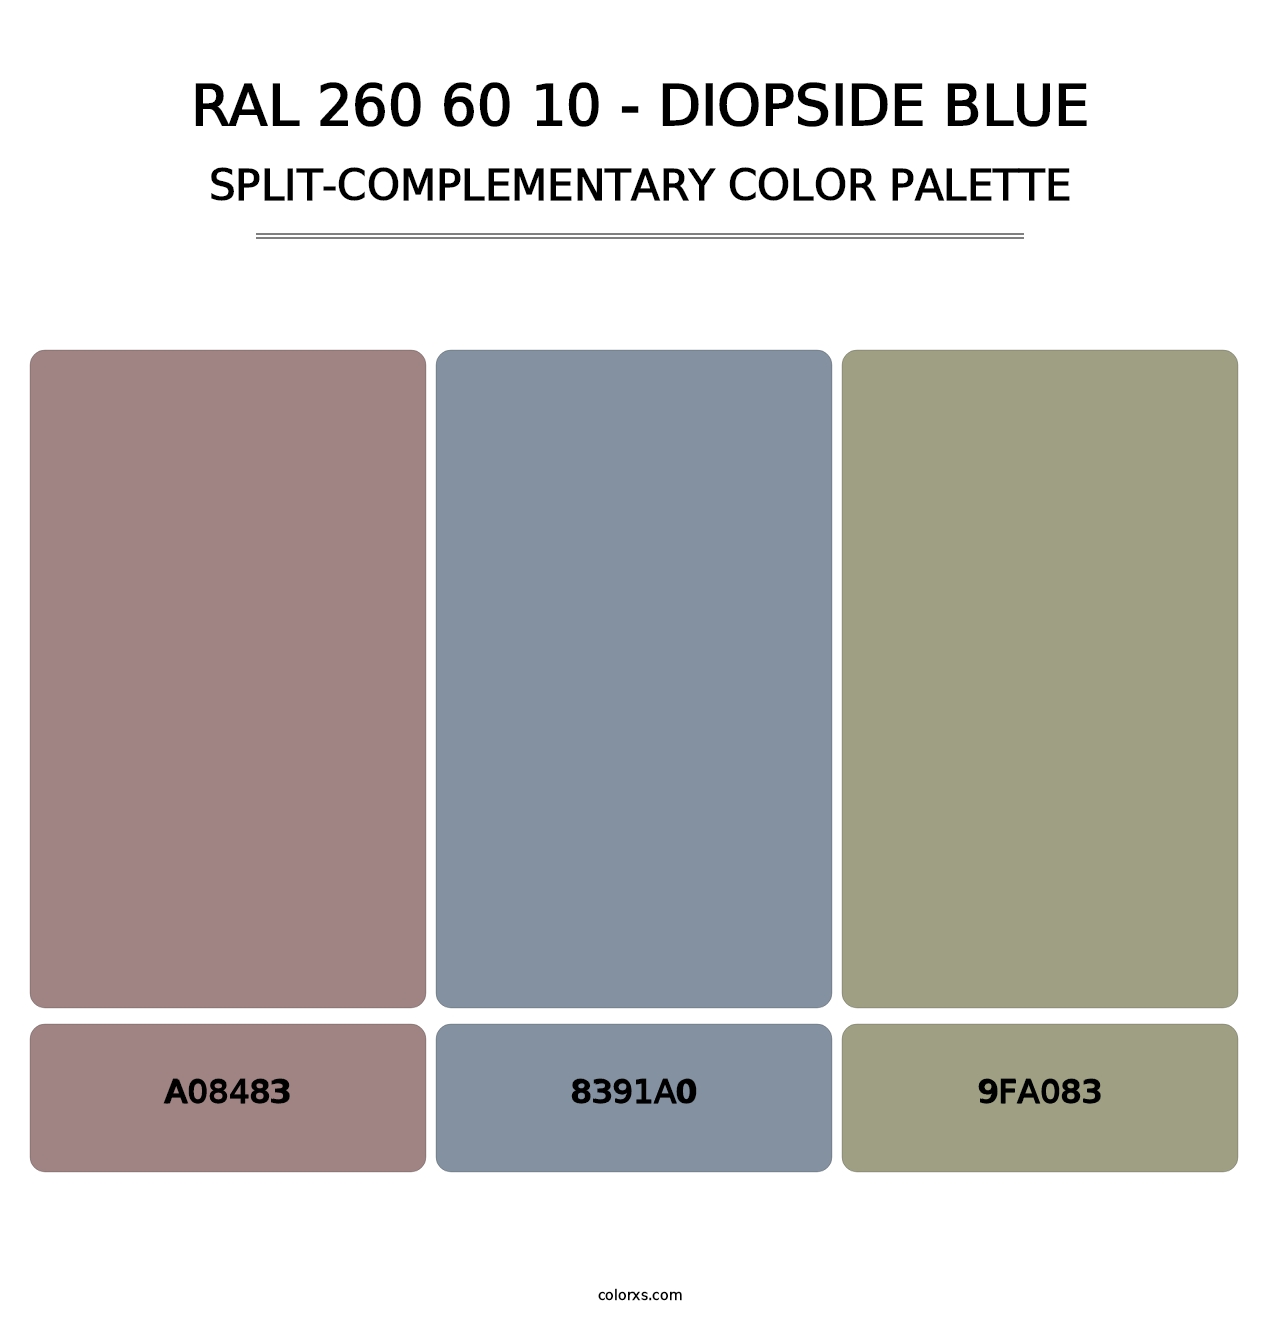 RAL 260 60 10 - Diopside Blue - Split-Complementary Color Palette